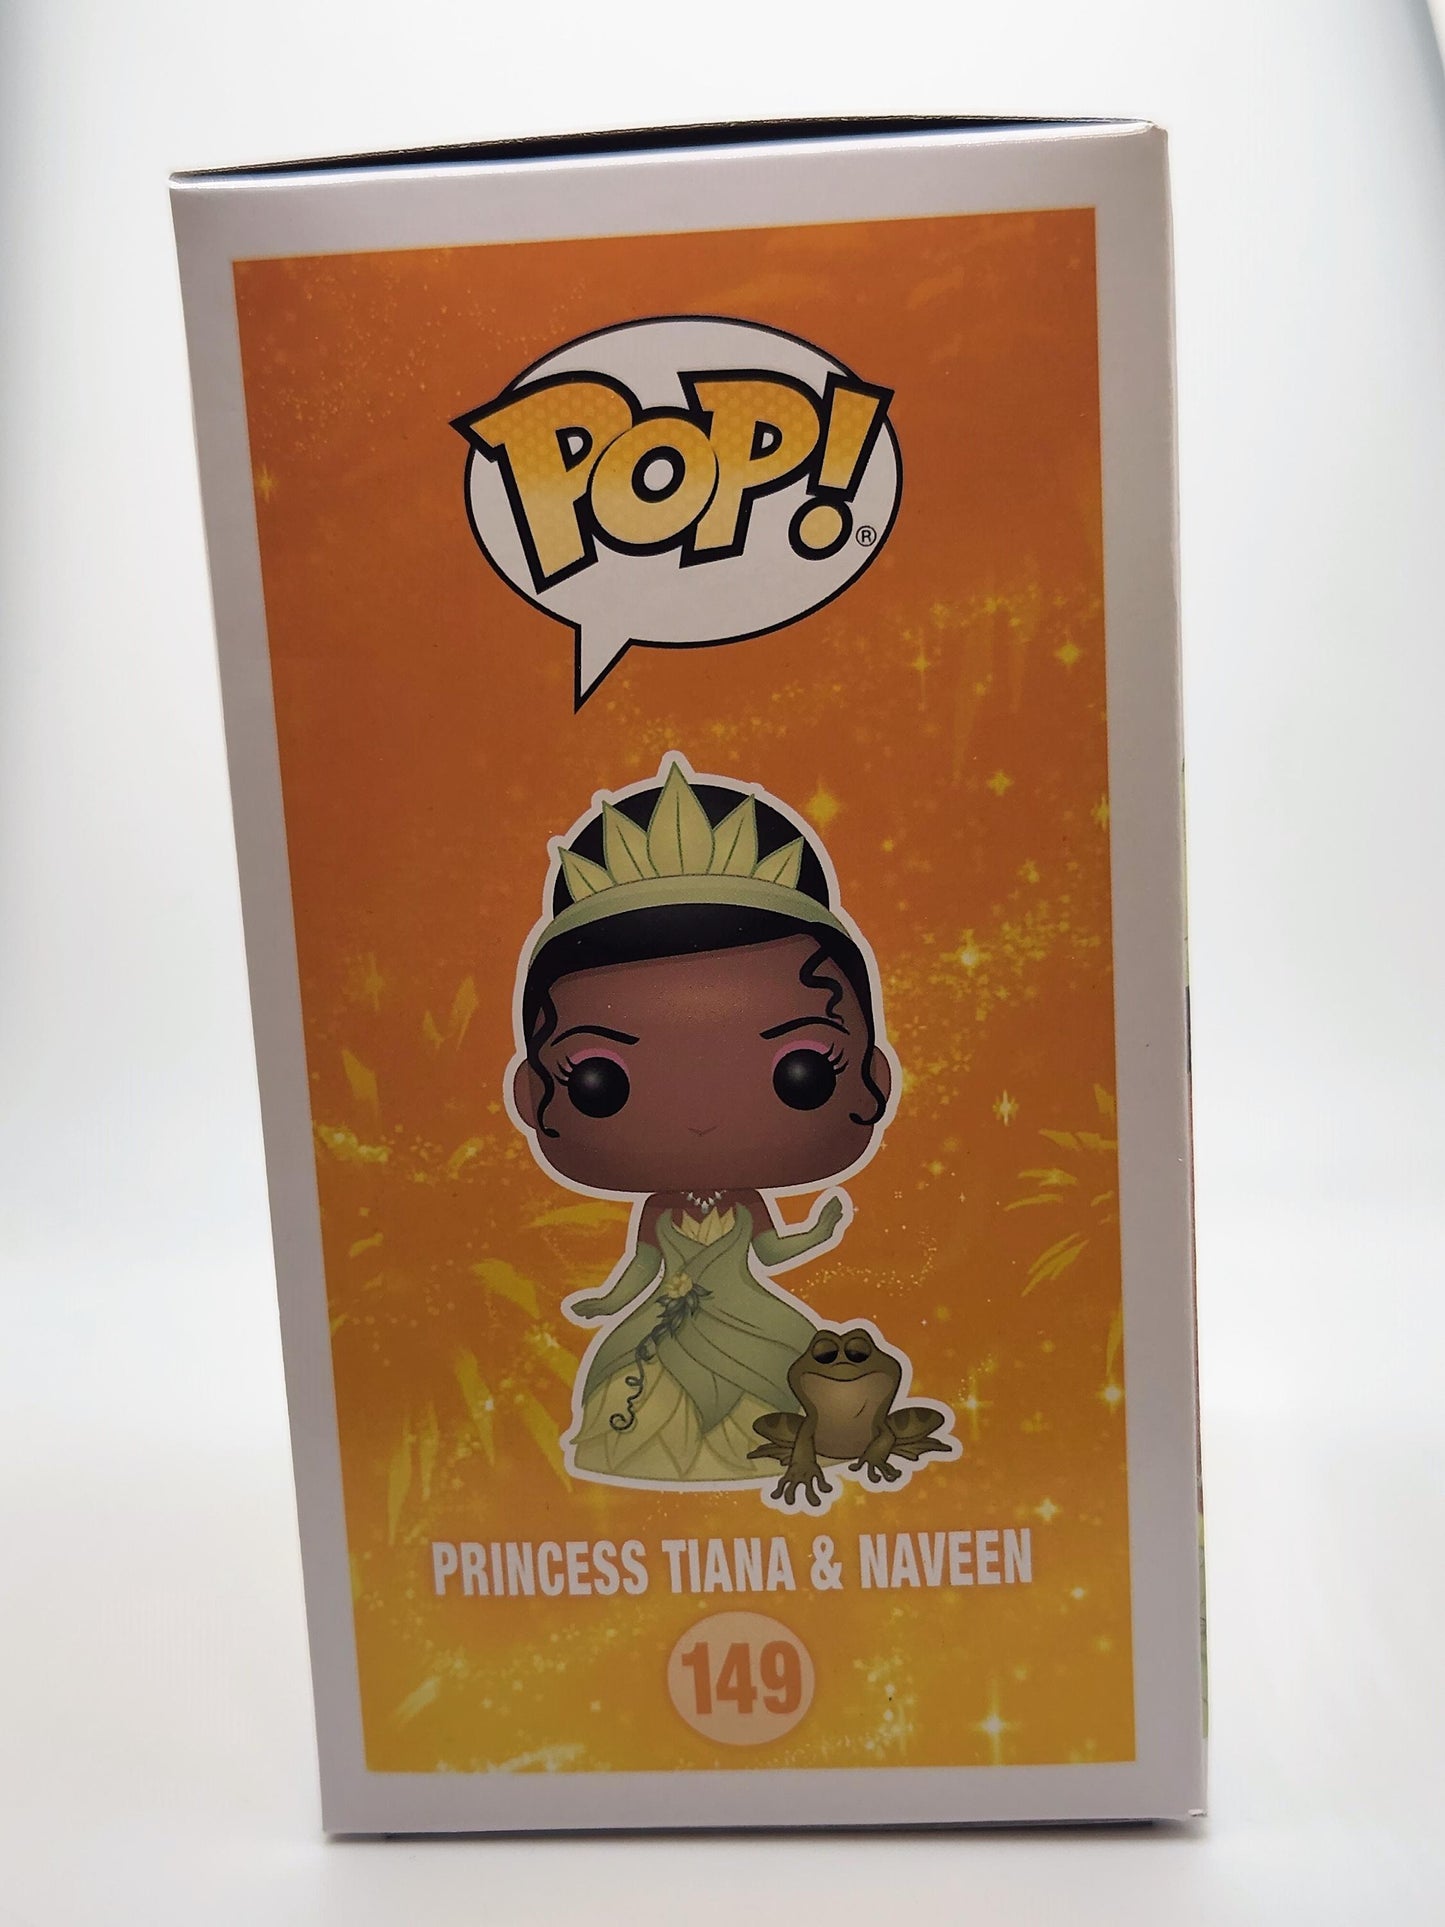 Princess Tiana & Naveen - #149 - Box Condition 8/10